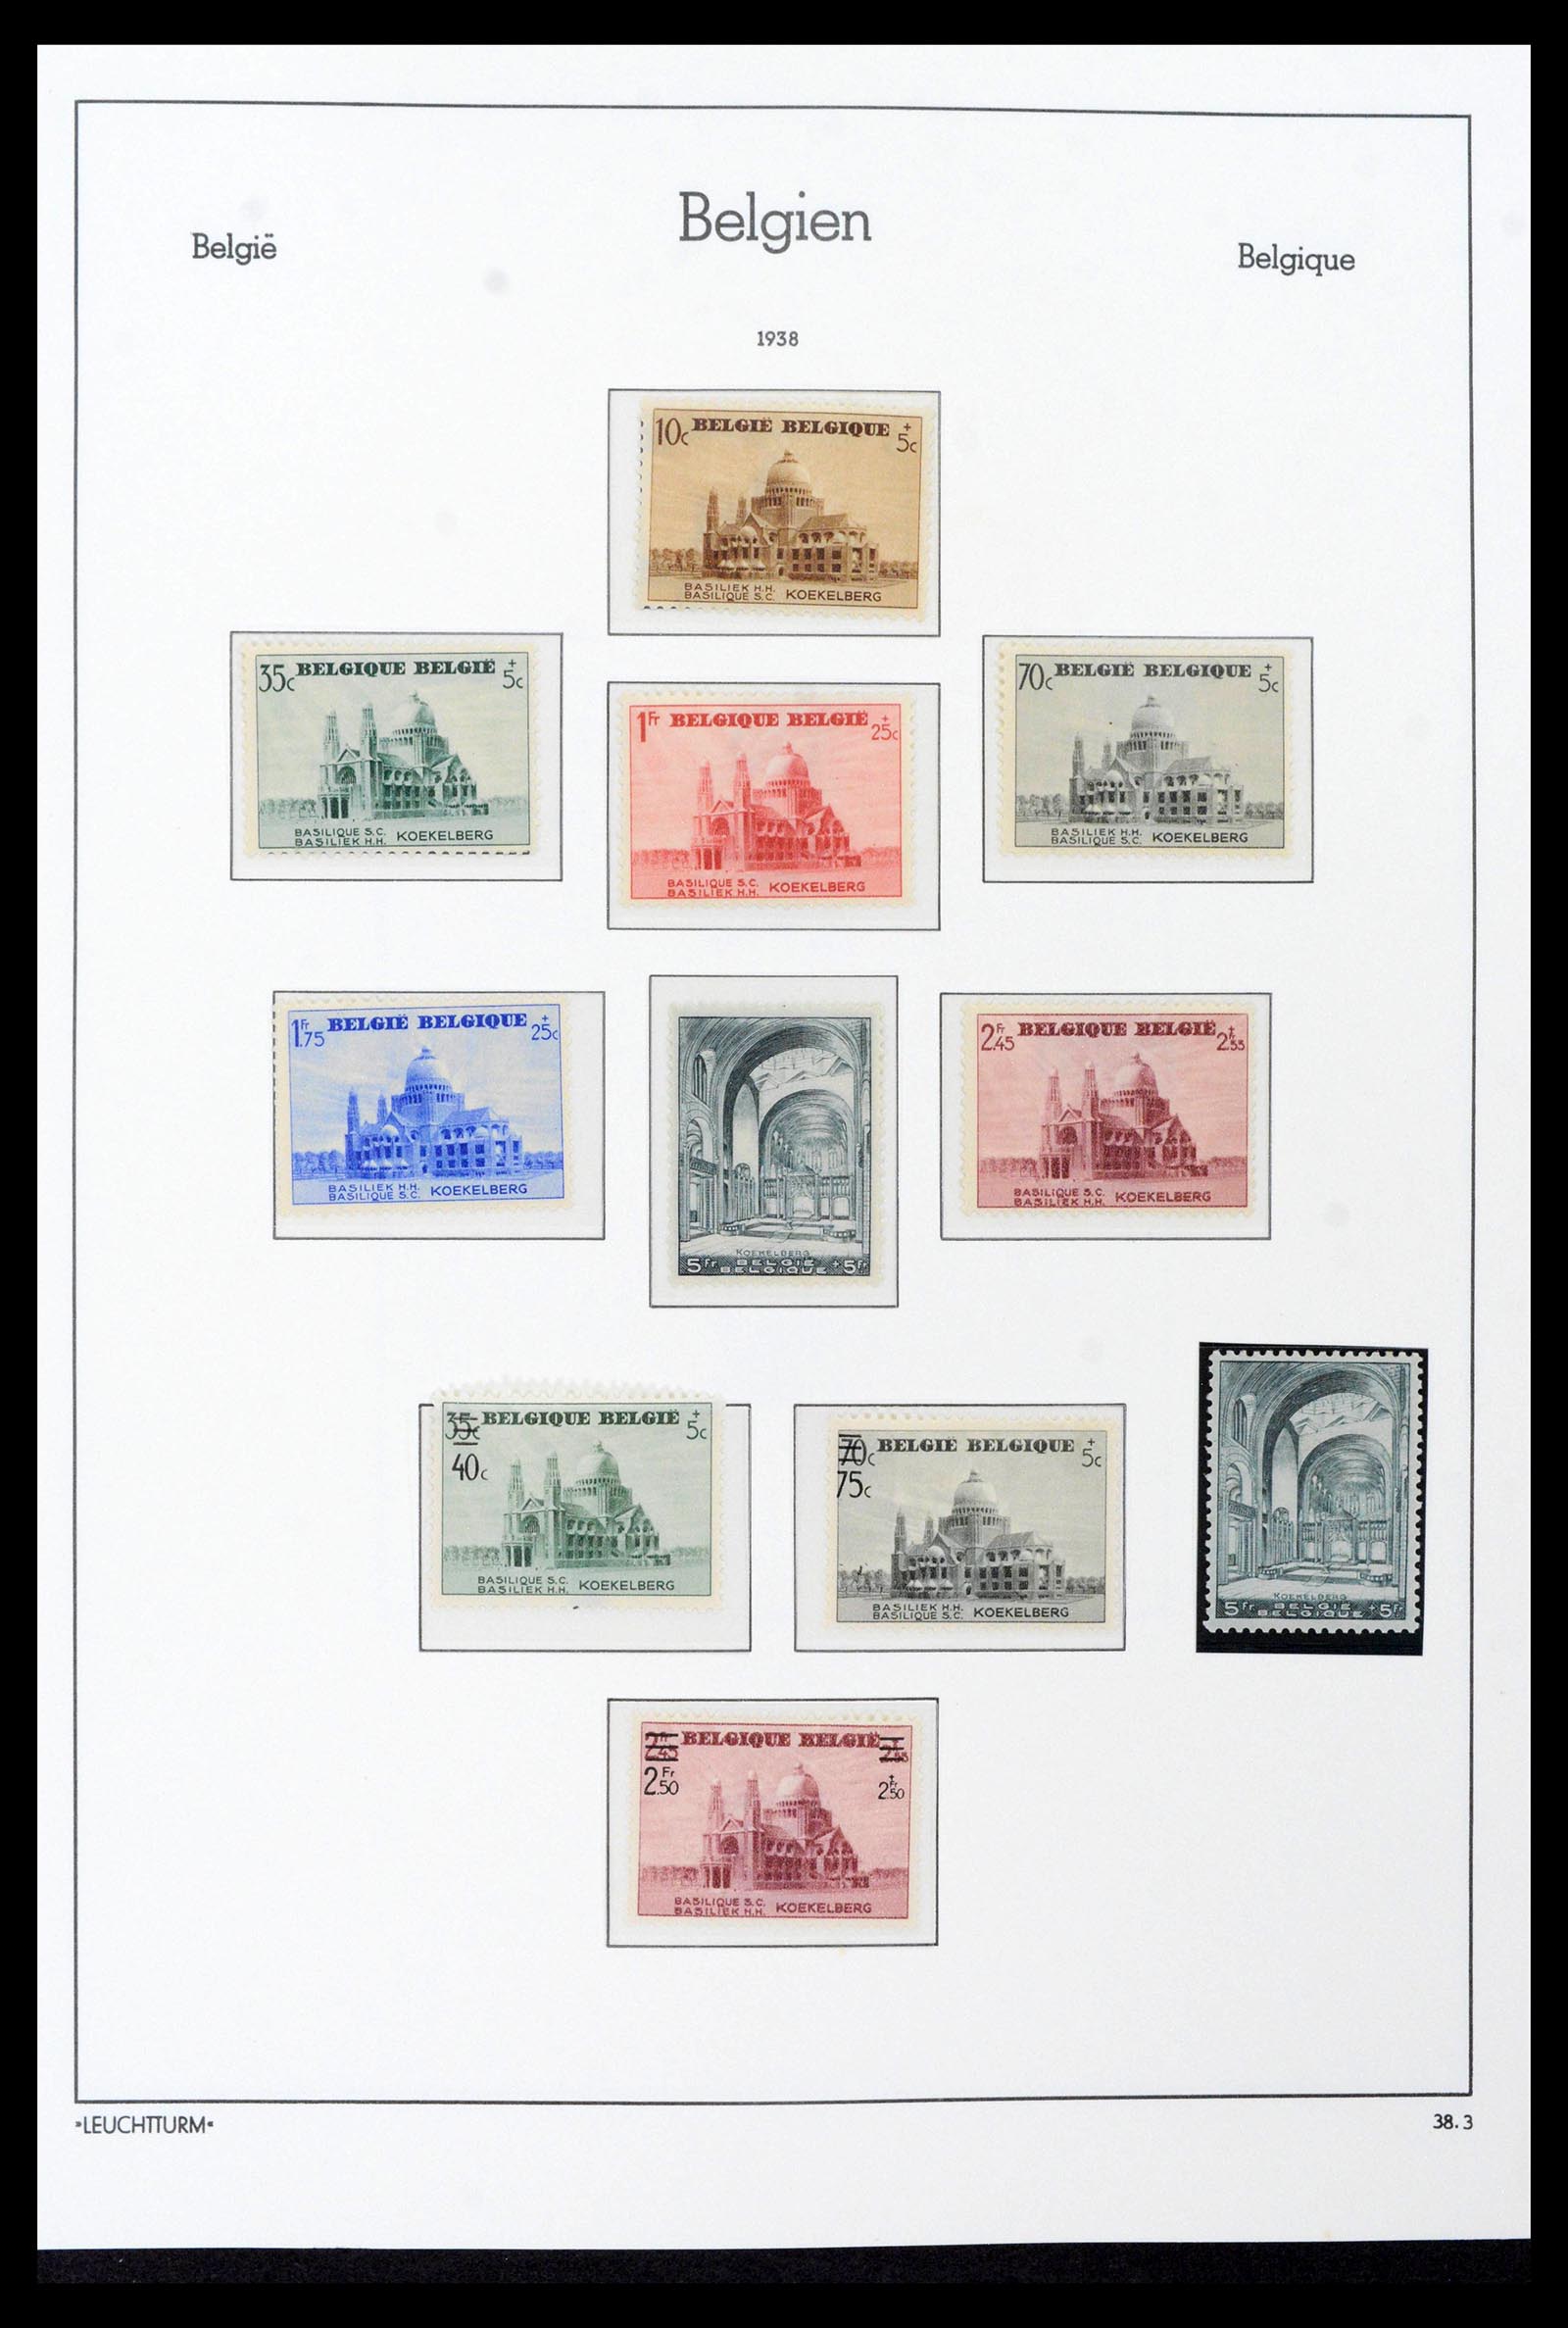 39137 0067 - Stamp collection 39137 Belgium 1849-2002.